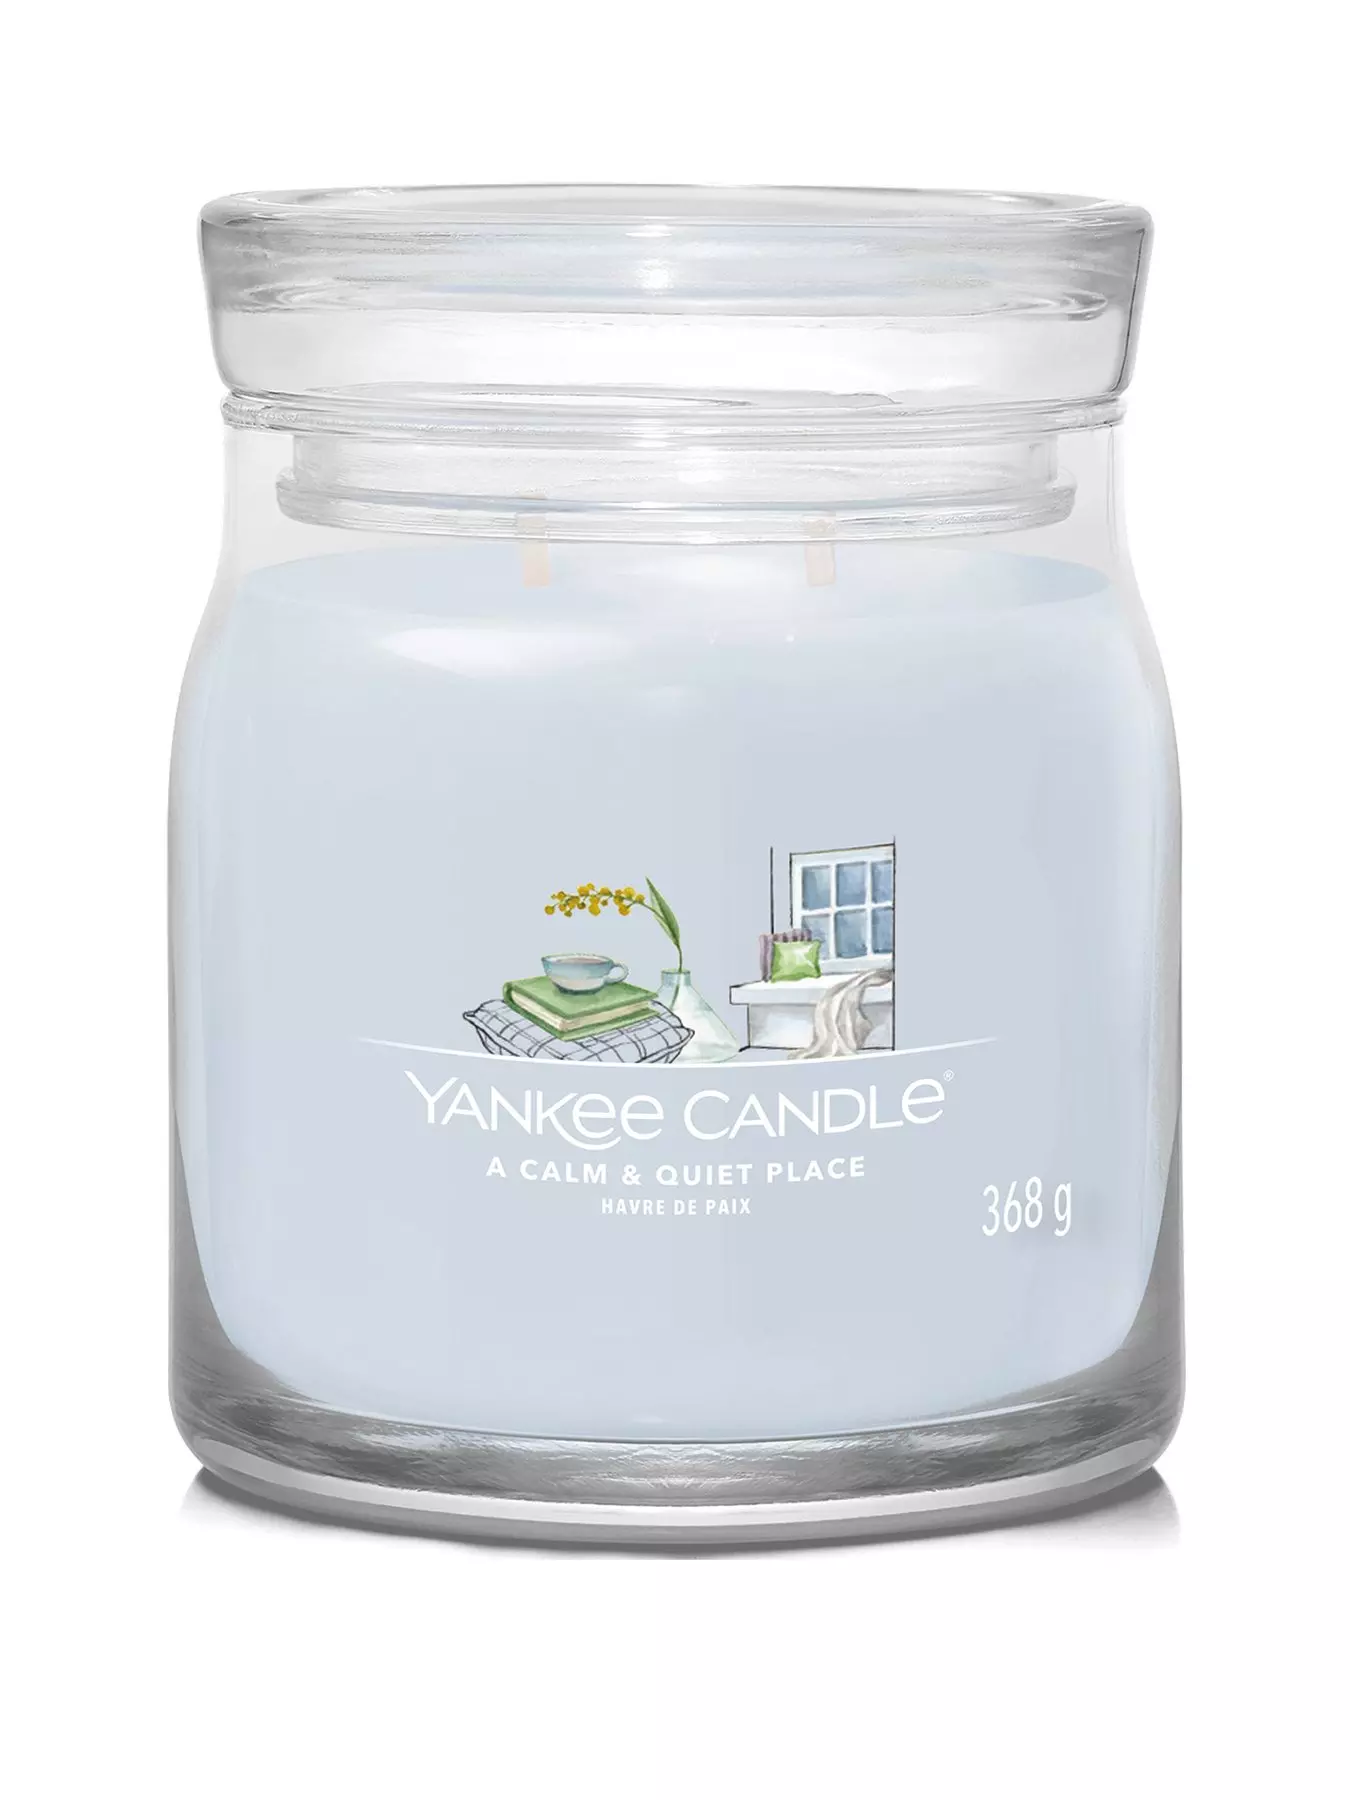 Yankee Candle Signature Medium Jar Candle – A Calm & Quiet Place